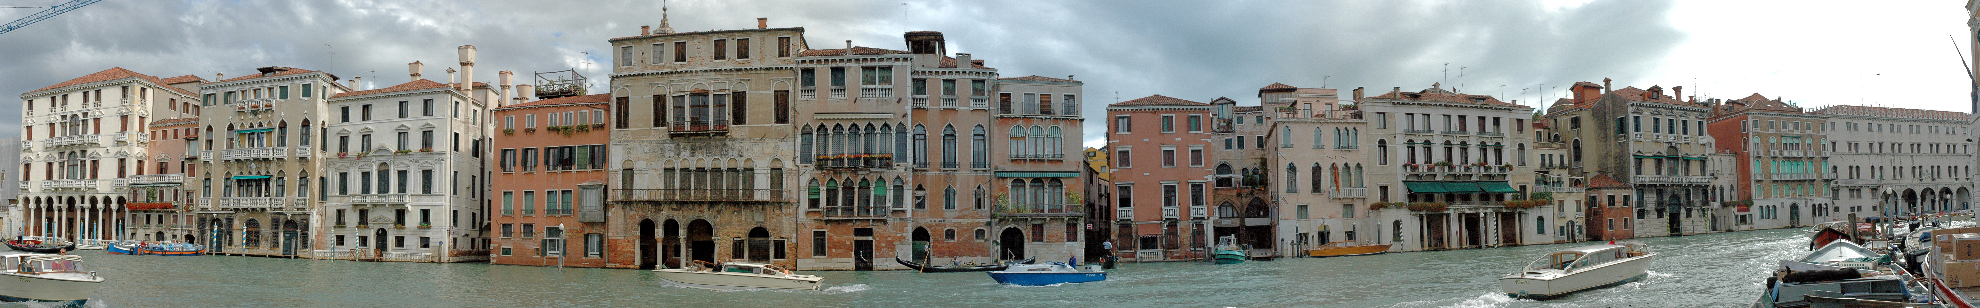 Venedig: Fassaden am Canal Grande